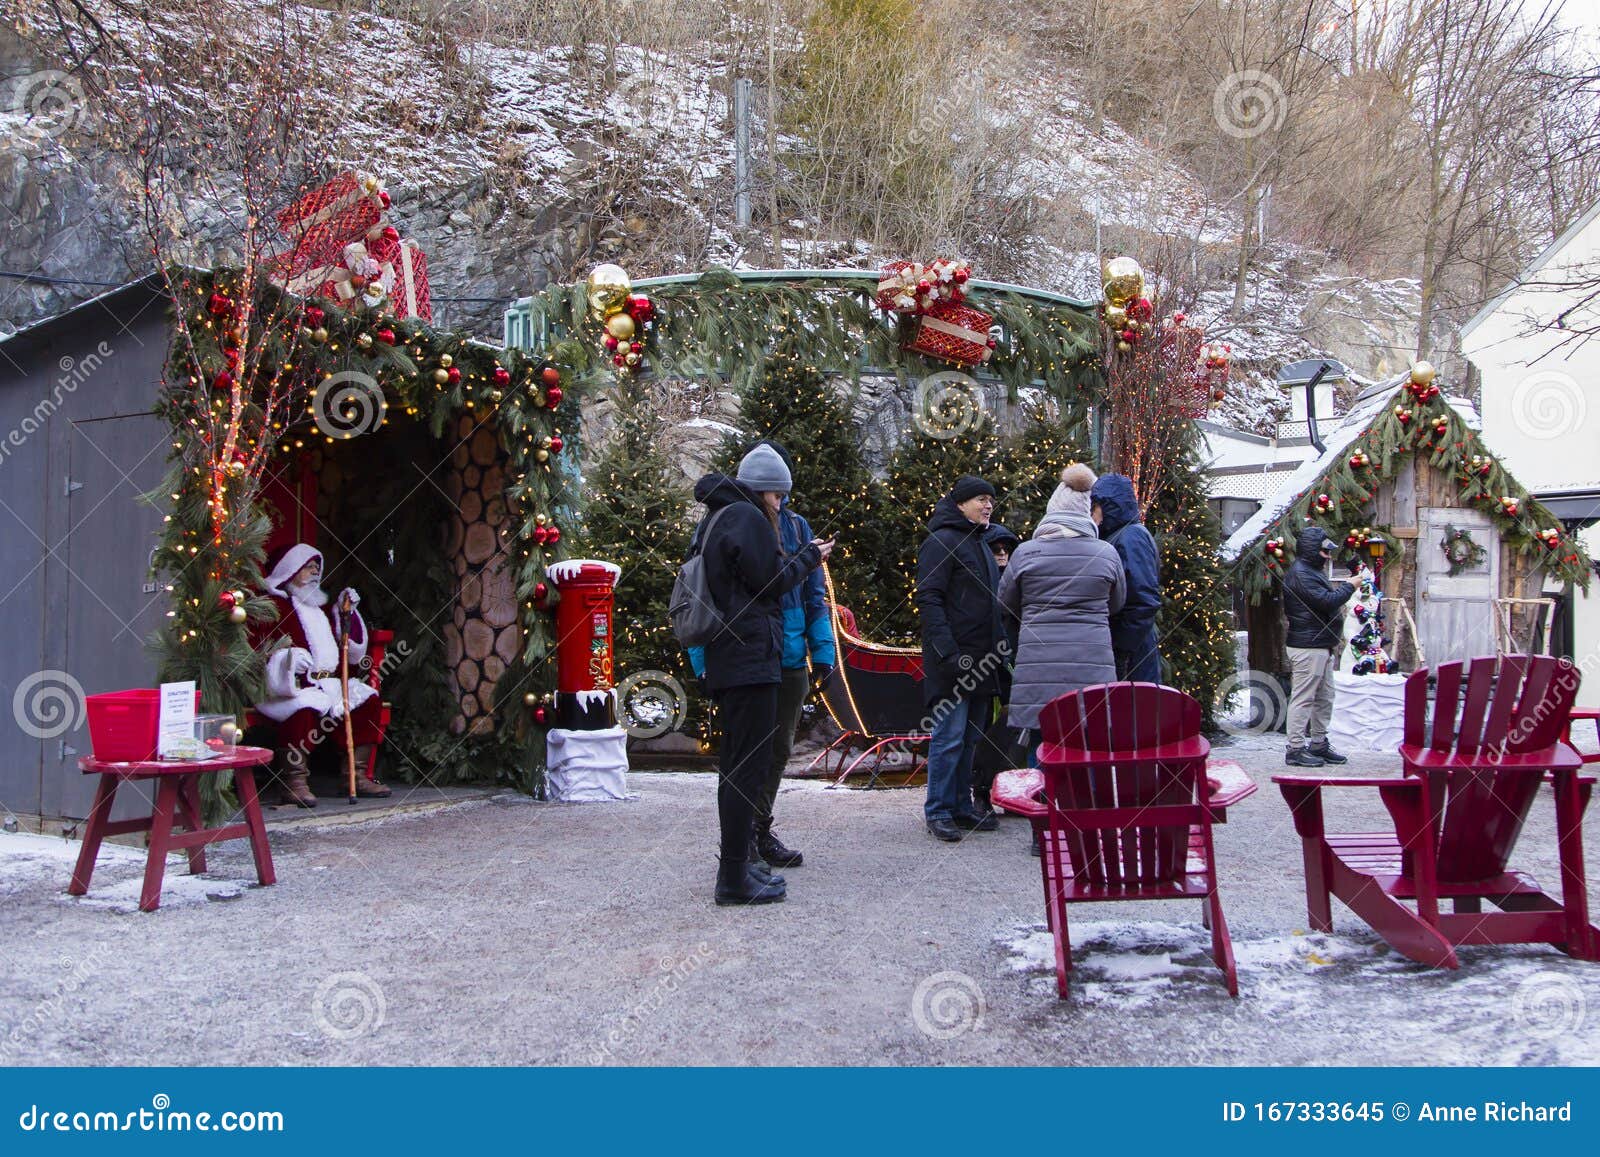 People Gathered Around Santa Claus and Festive Christmas ...